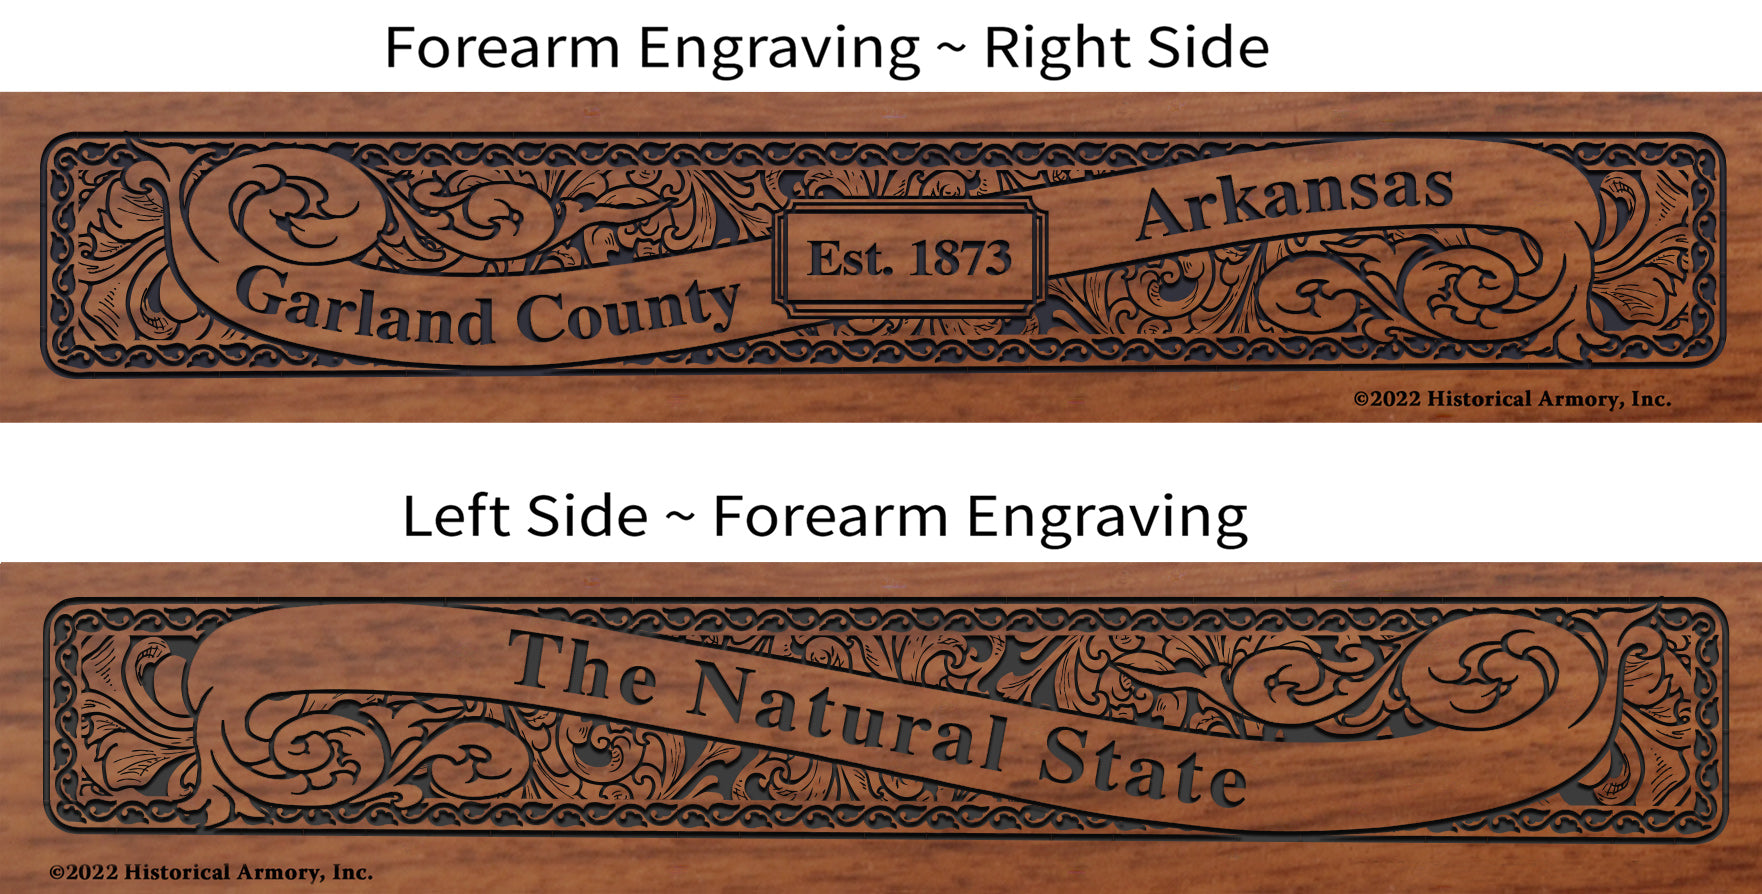 Garland County Arkansas Engraved Rifle Forearm